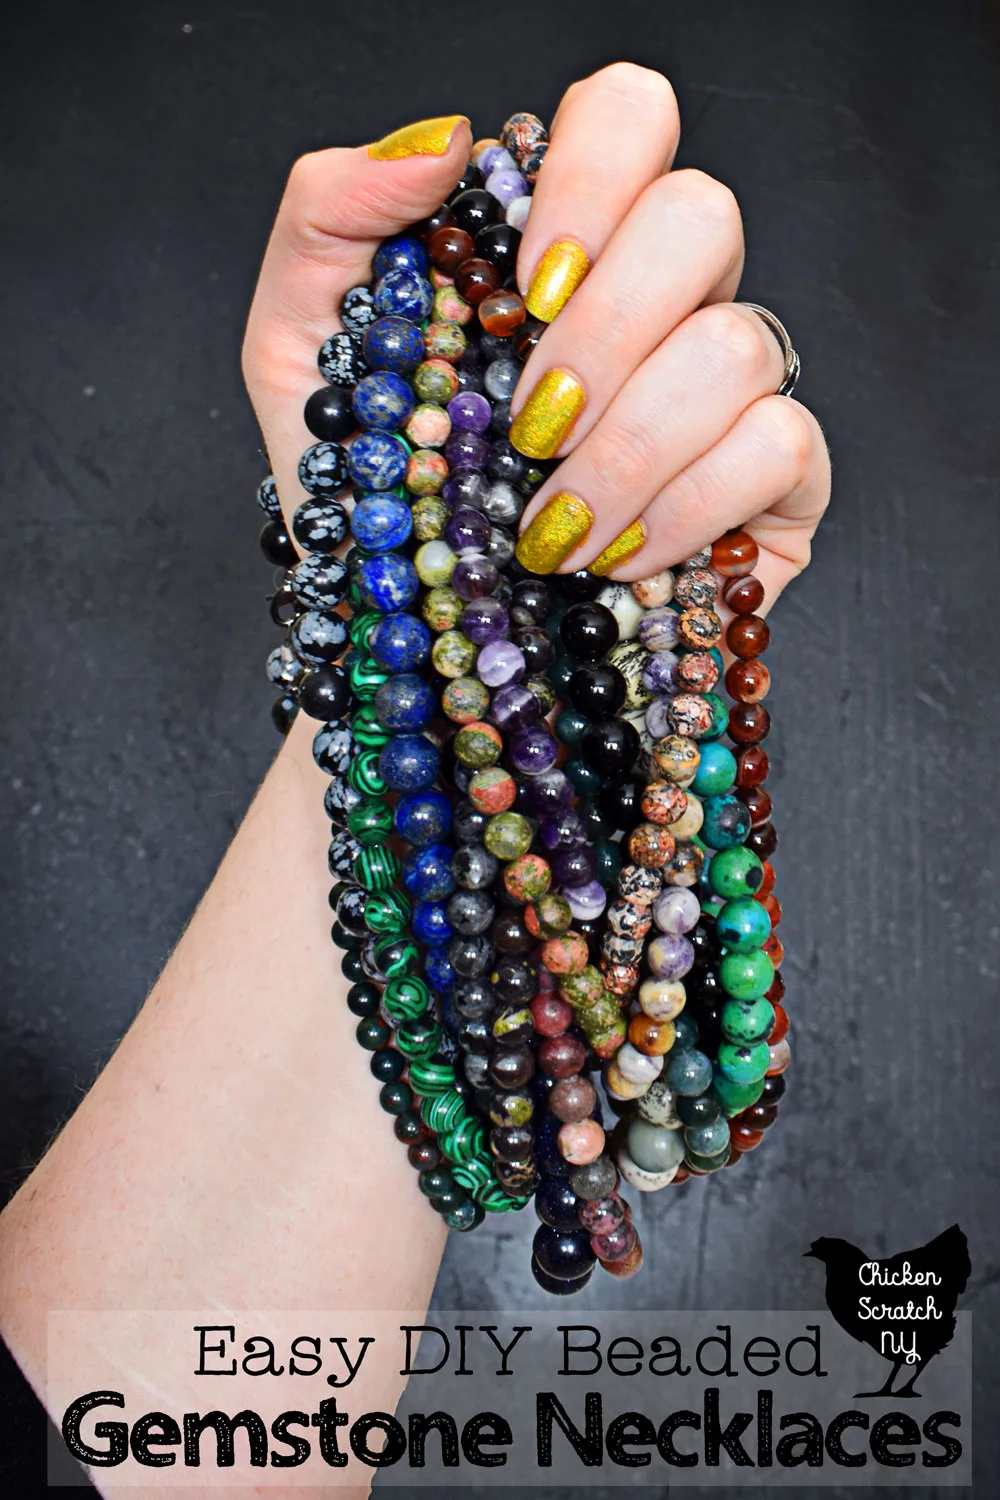 emerald beryl beads necklace - Diamond Polki jewellery store online